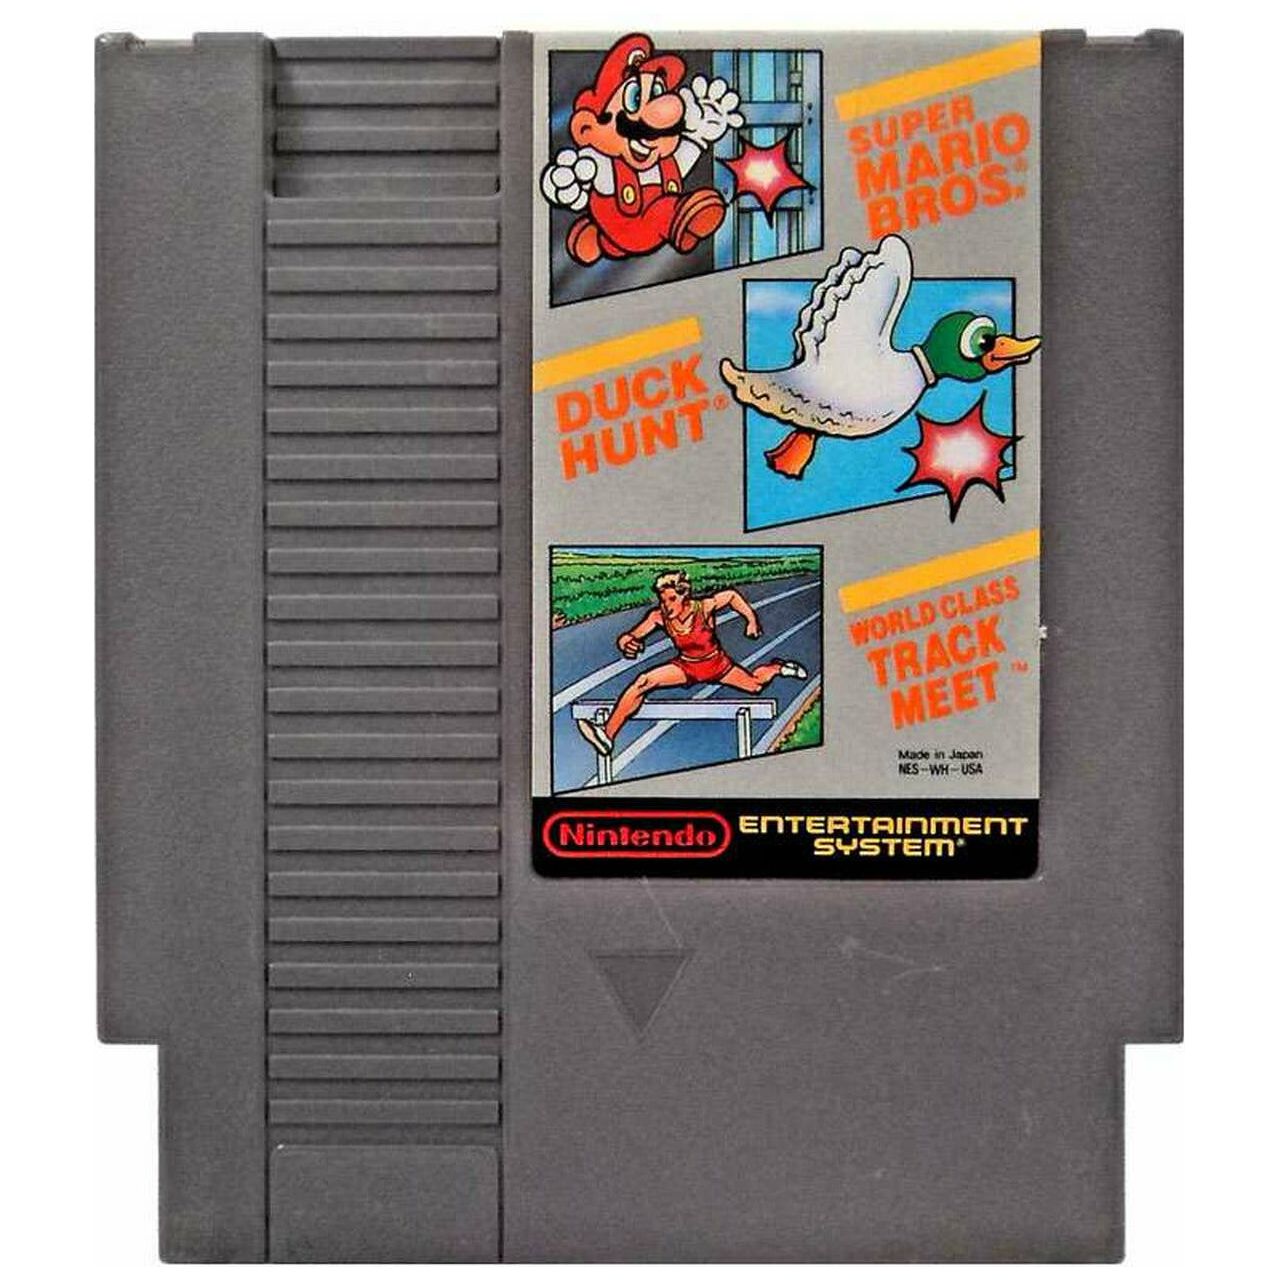 NES - Super Mario Bros + World Class Track Meet + Duck Hunt (cartouche uniquement)